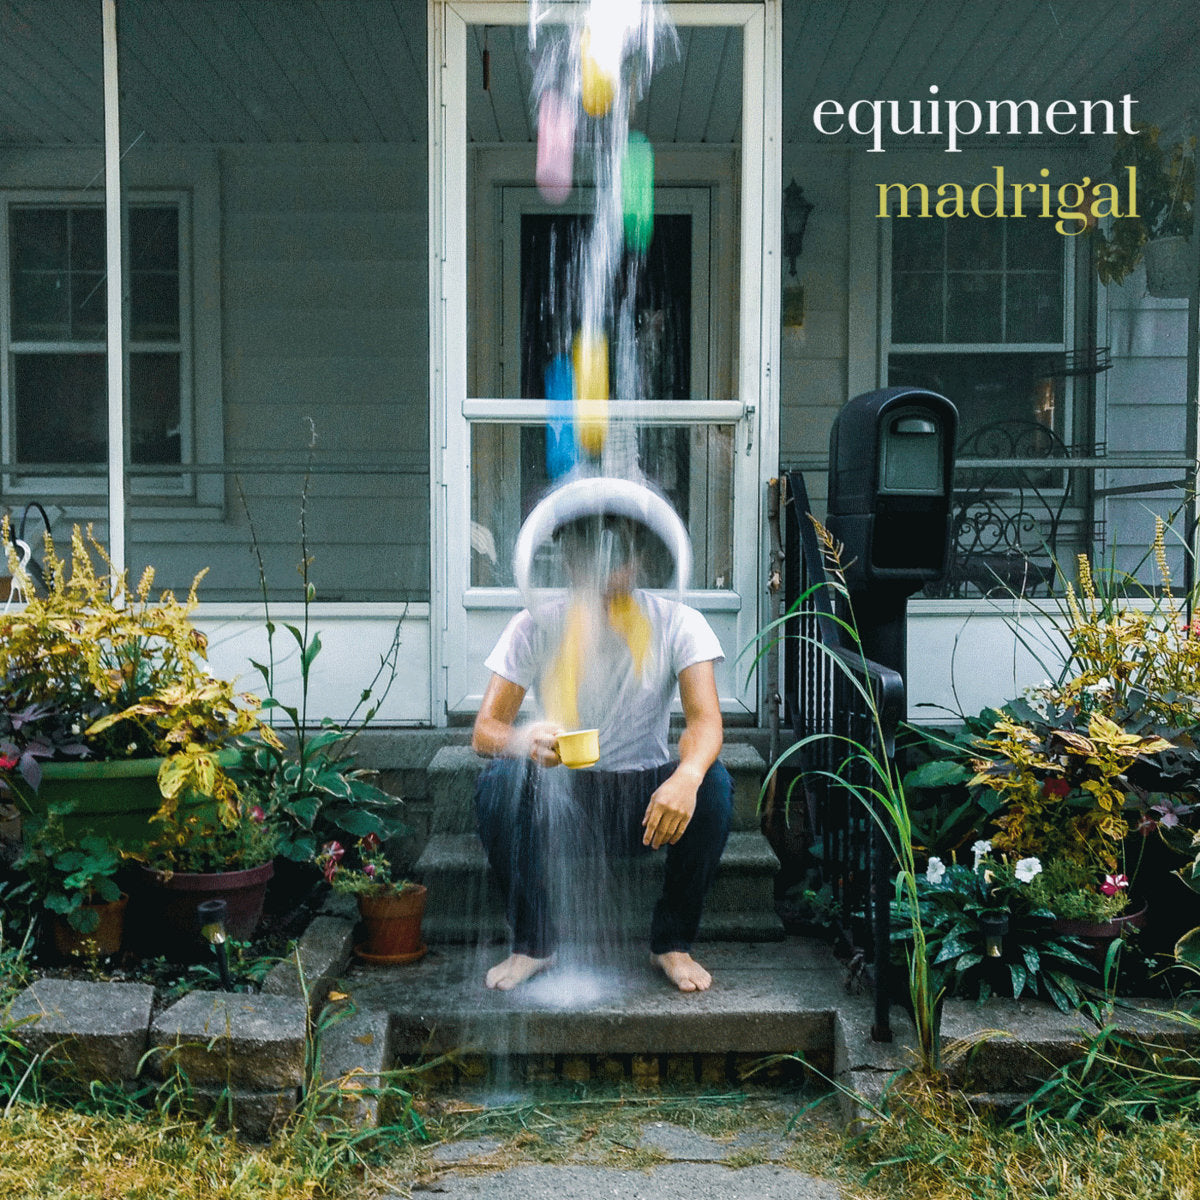 Equipment - Madrigal / Chump